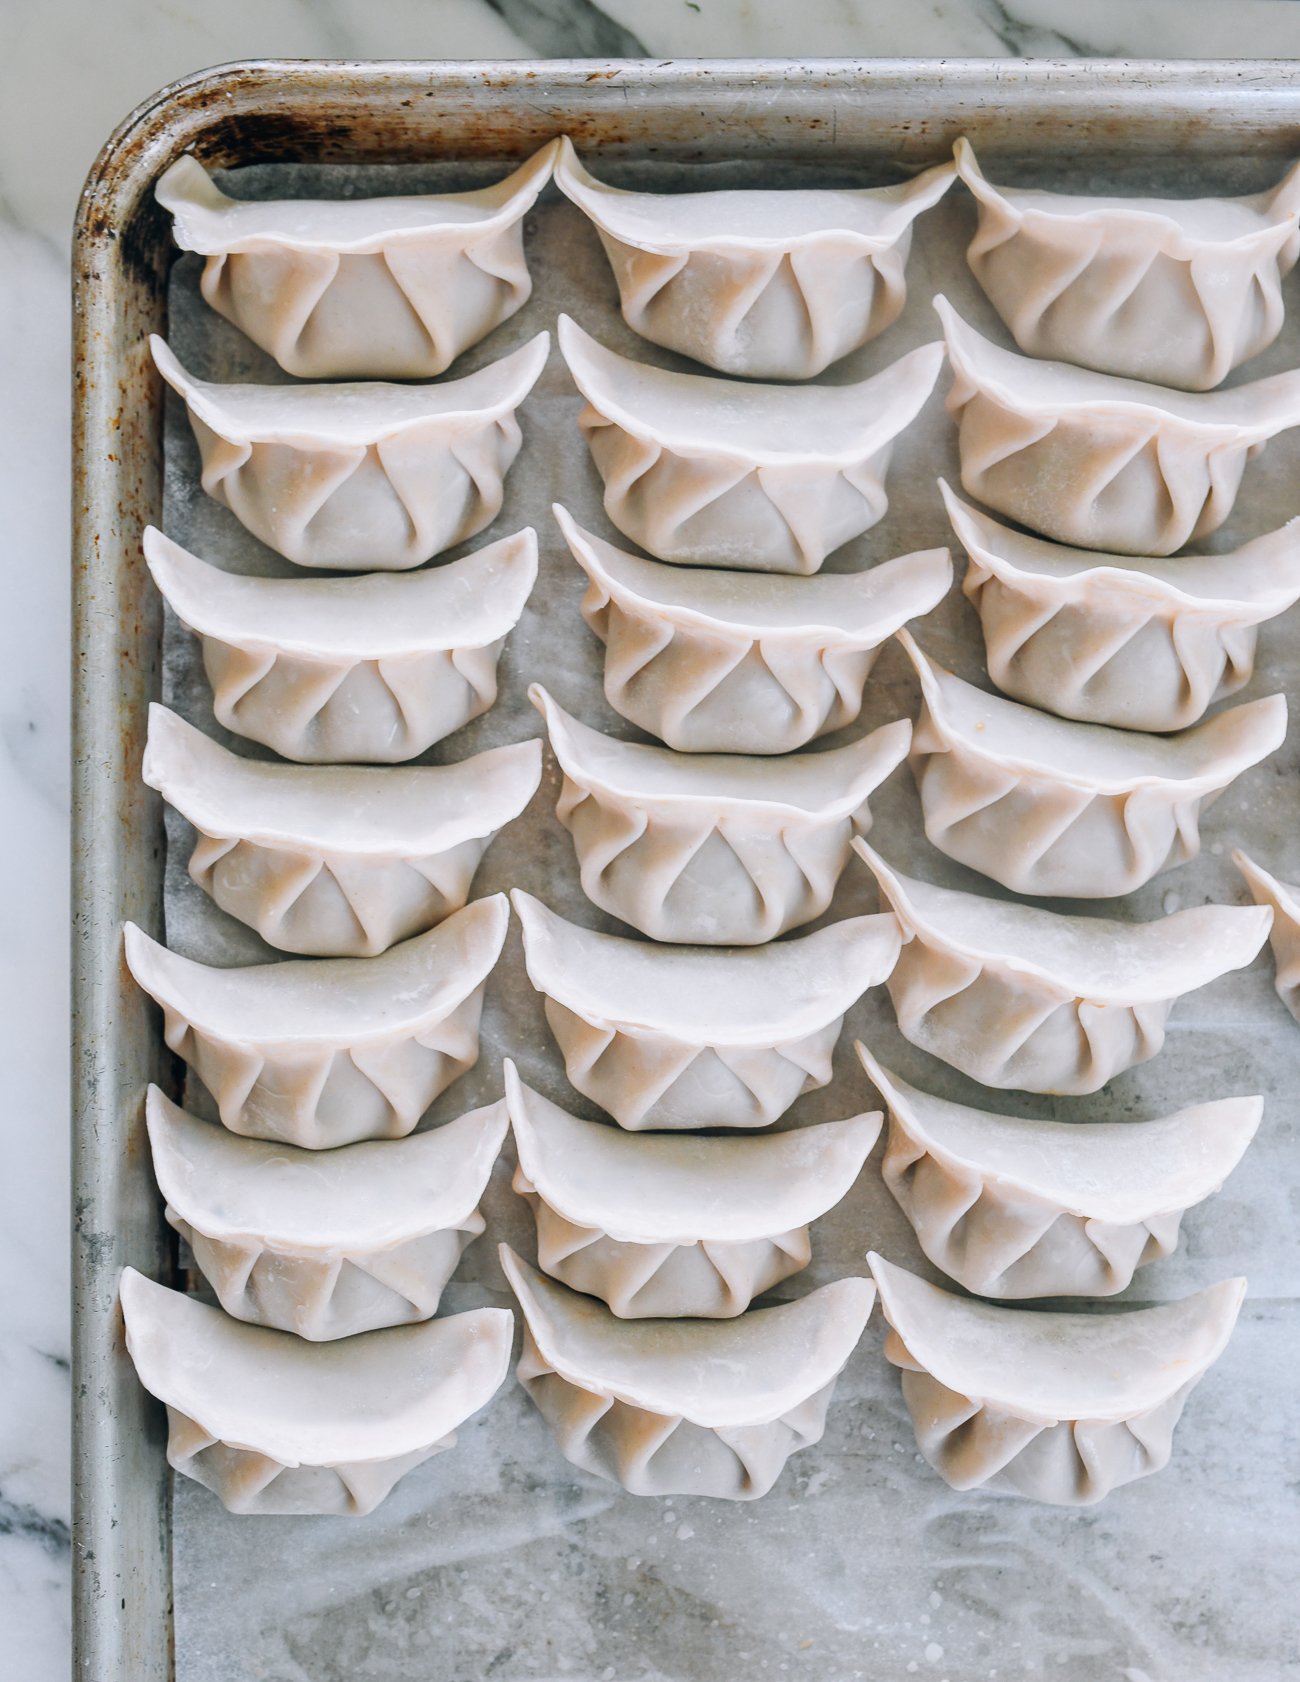 assembled dumplings on parchment lined baking sheet